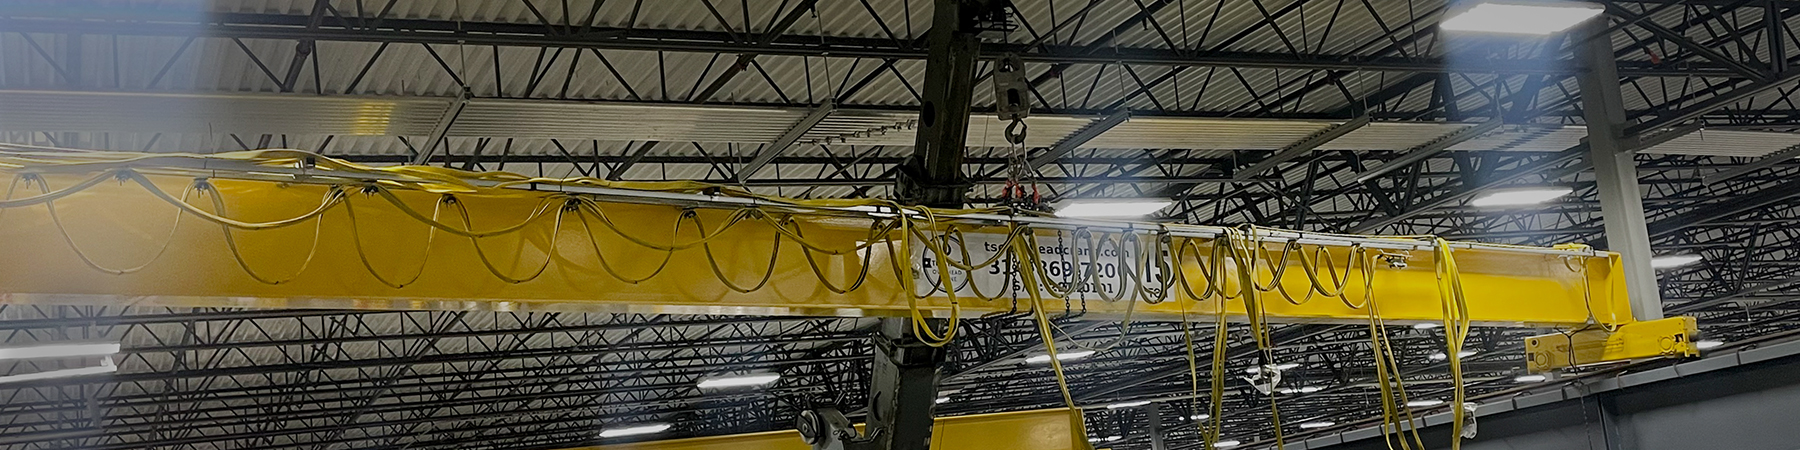 Refurbished overhead bridge crane being installed in a new location